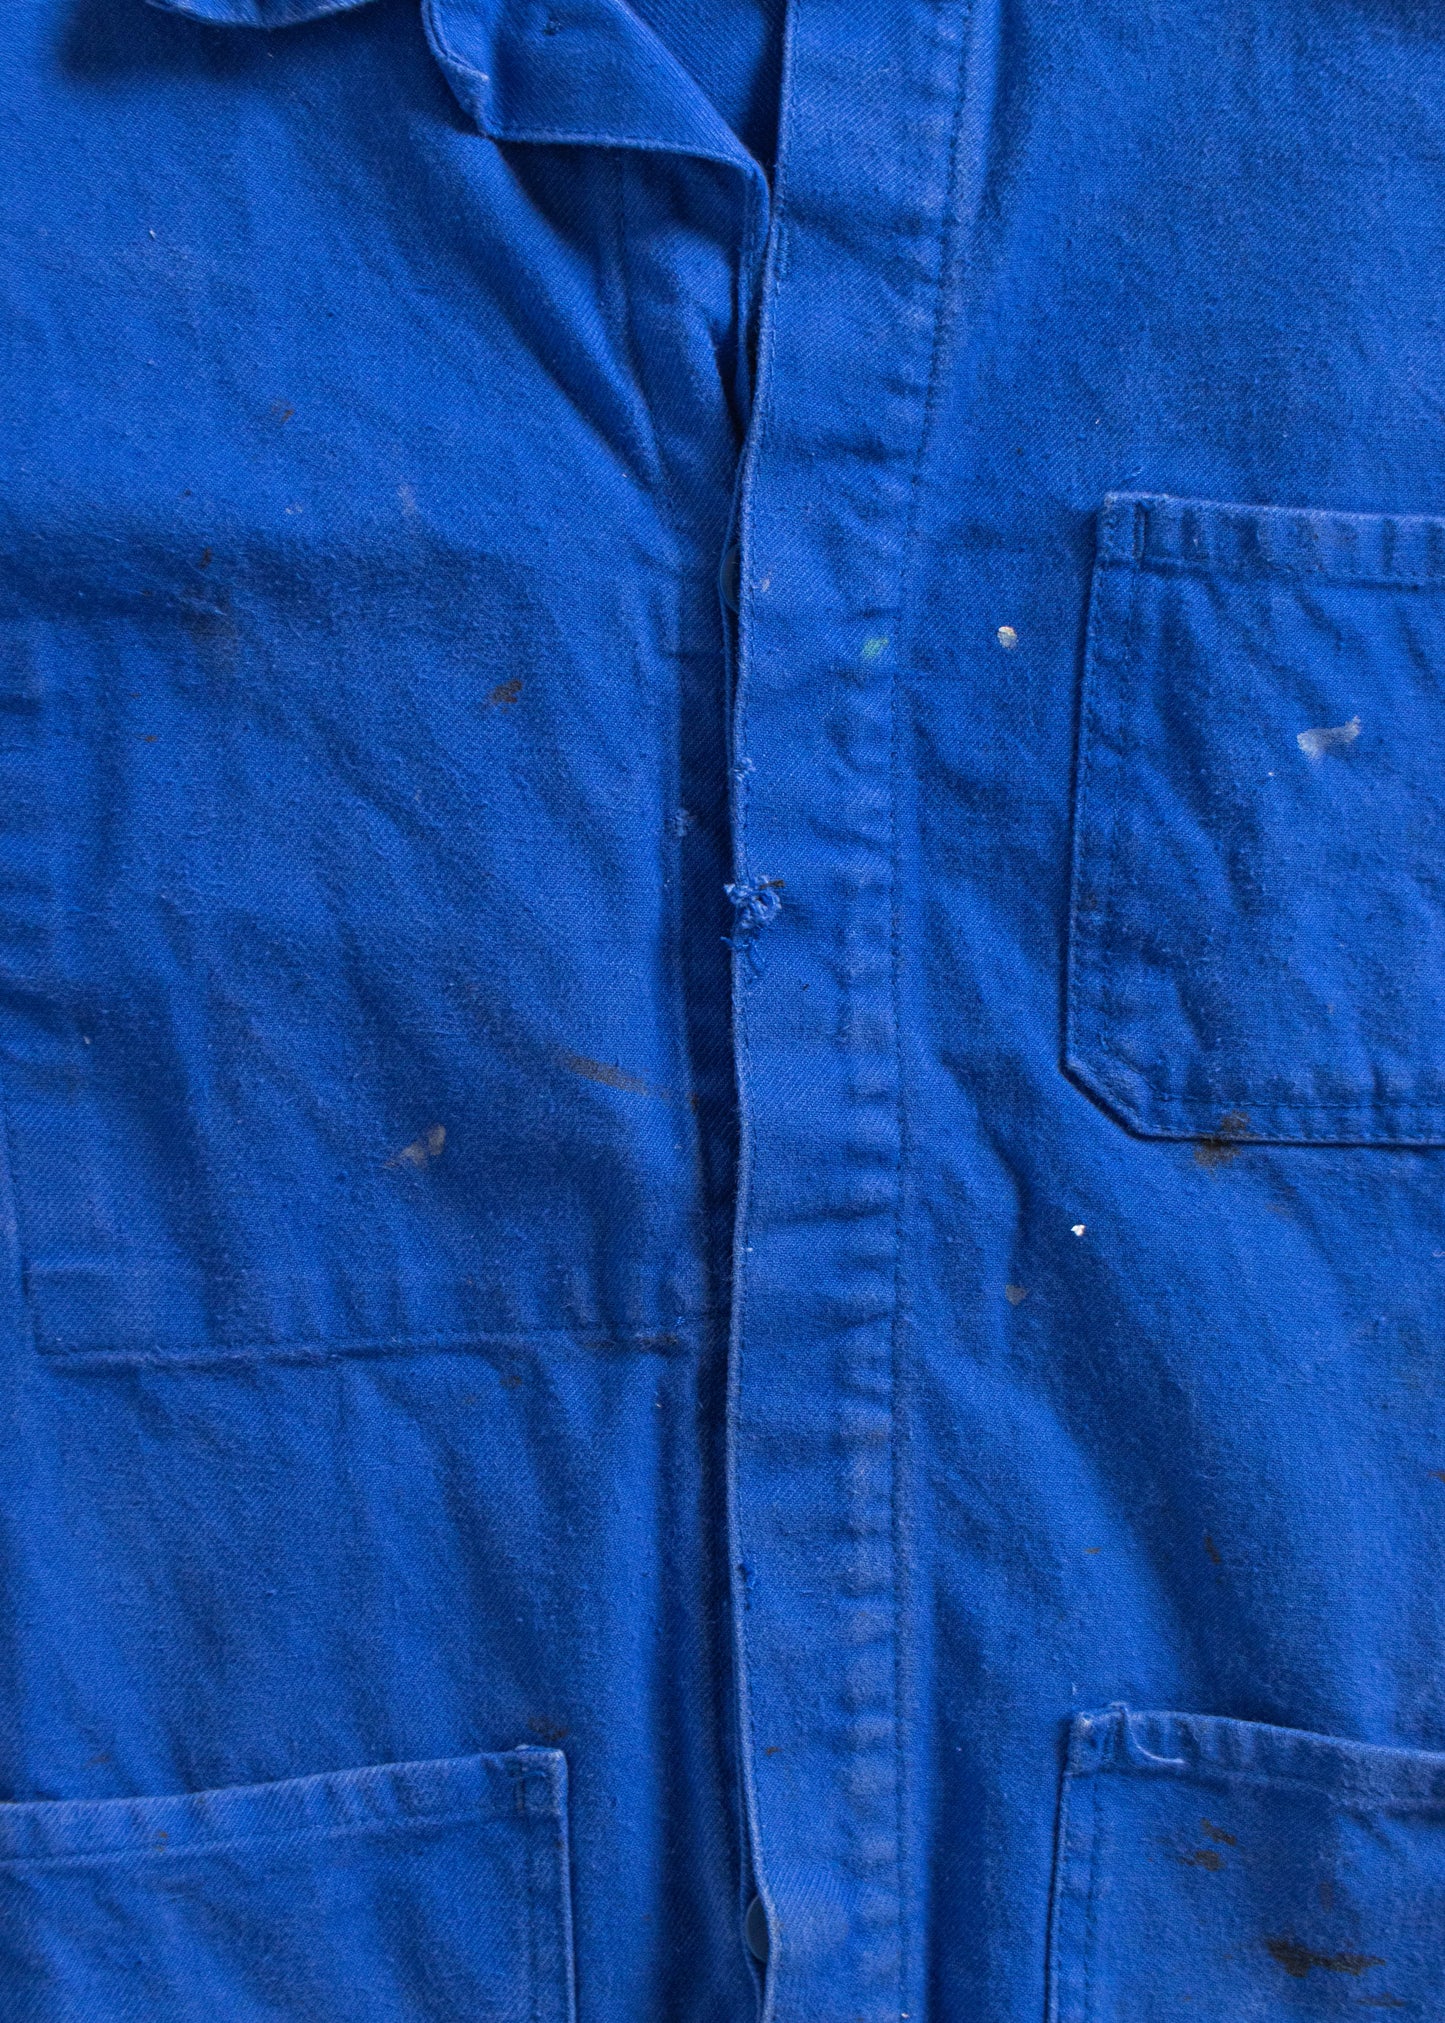 1980s Ergos Bleu de Travail French Workwear Chore Jacket Size M/L